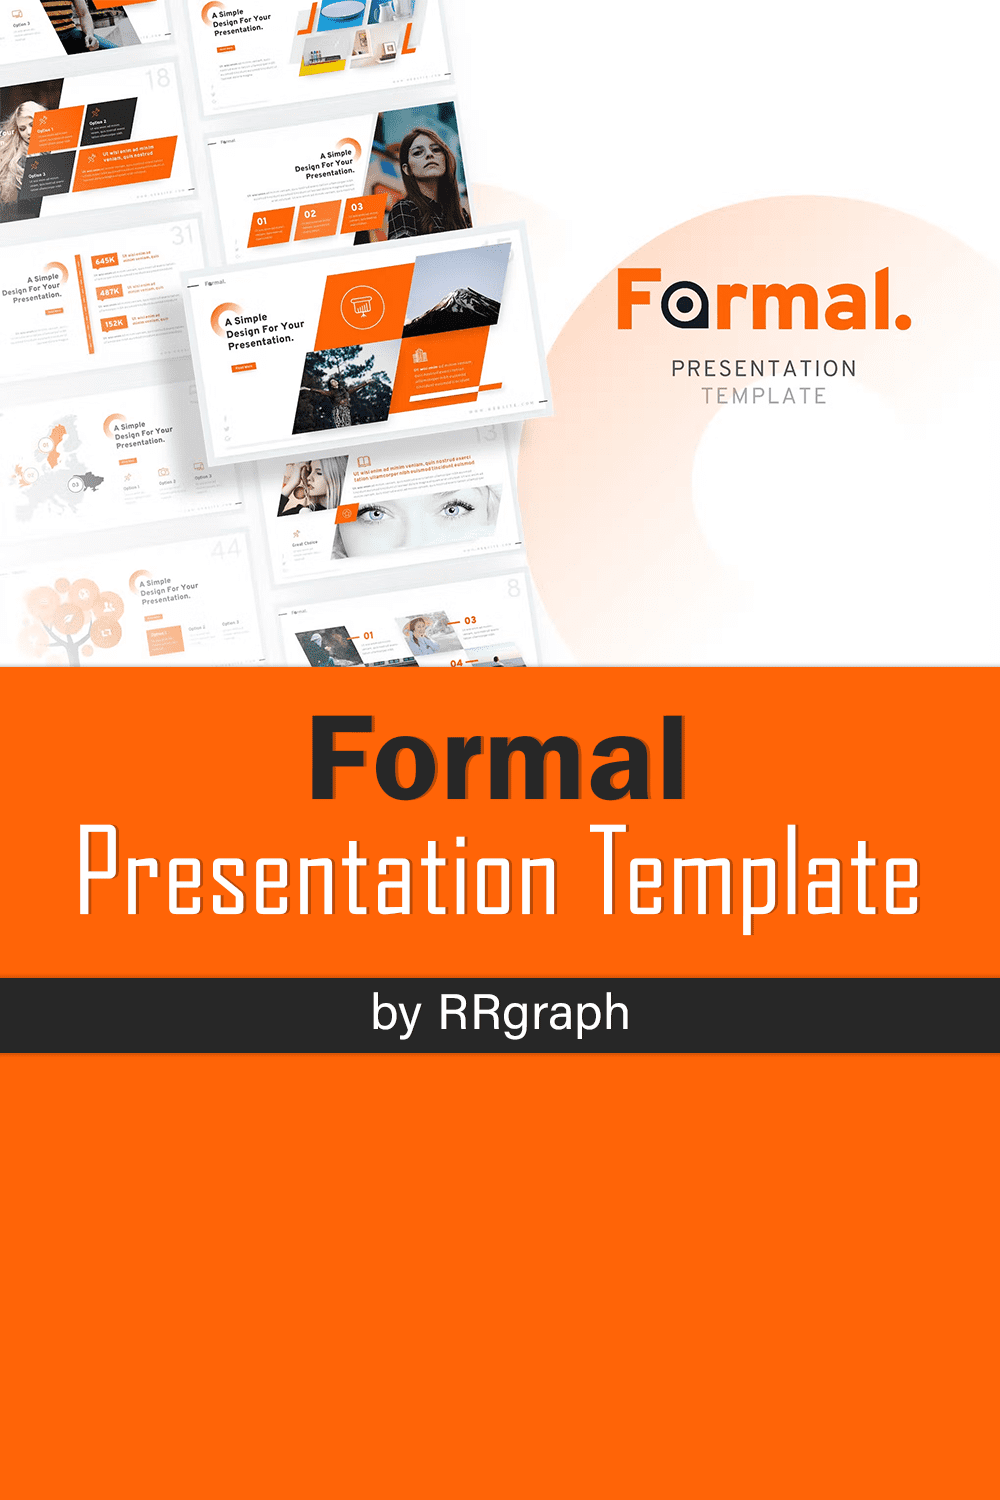 Template For Formal Presentations - Pinterest.